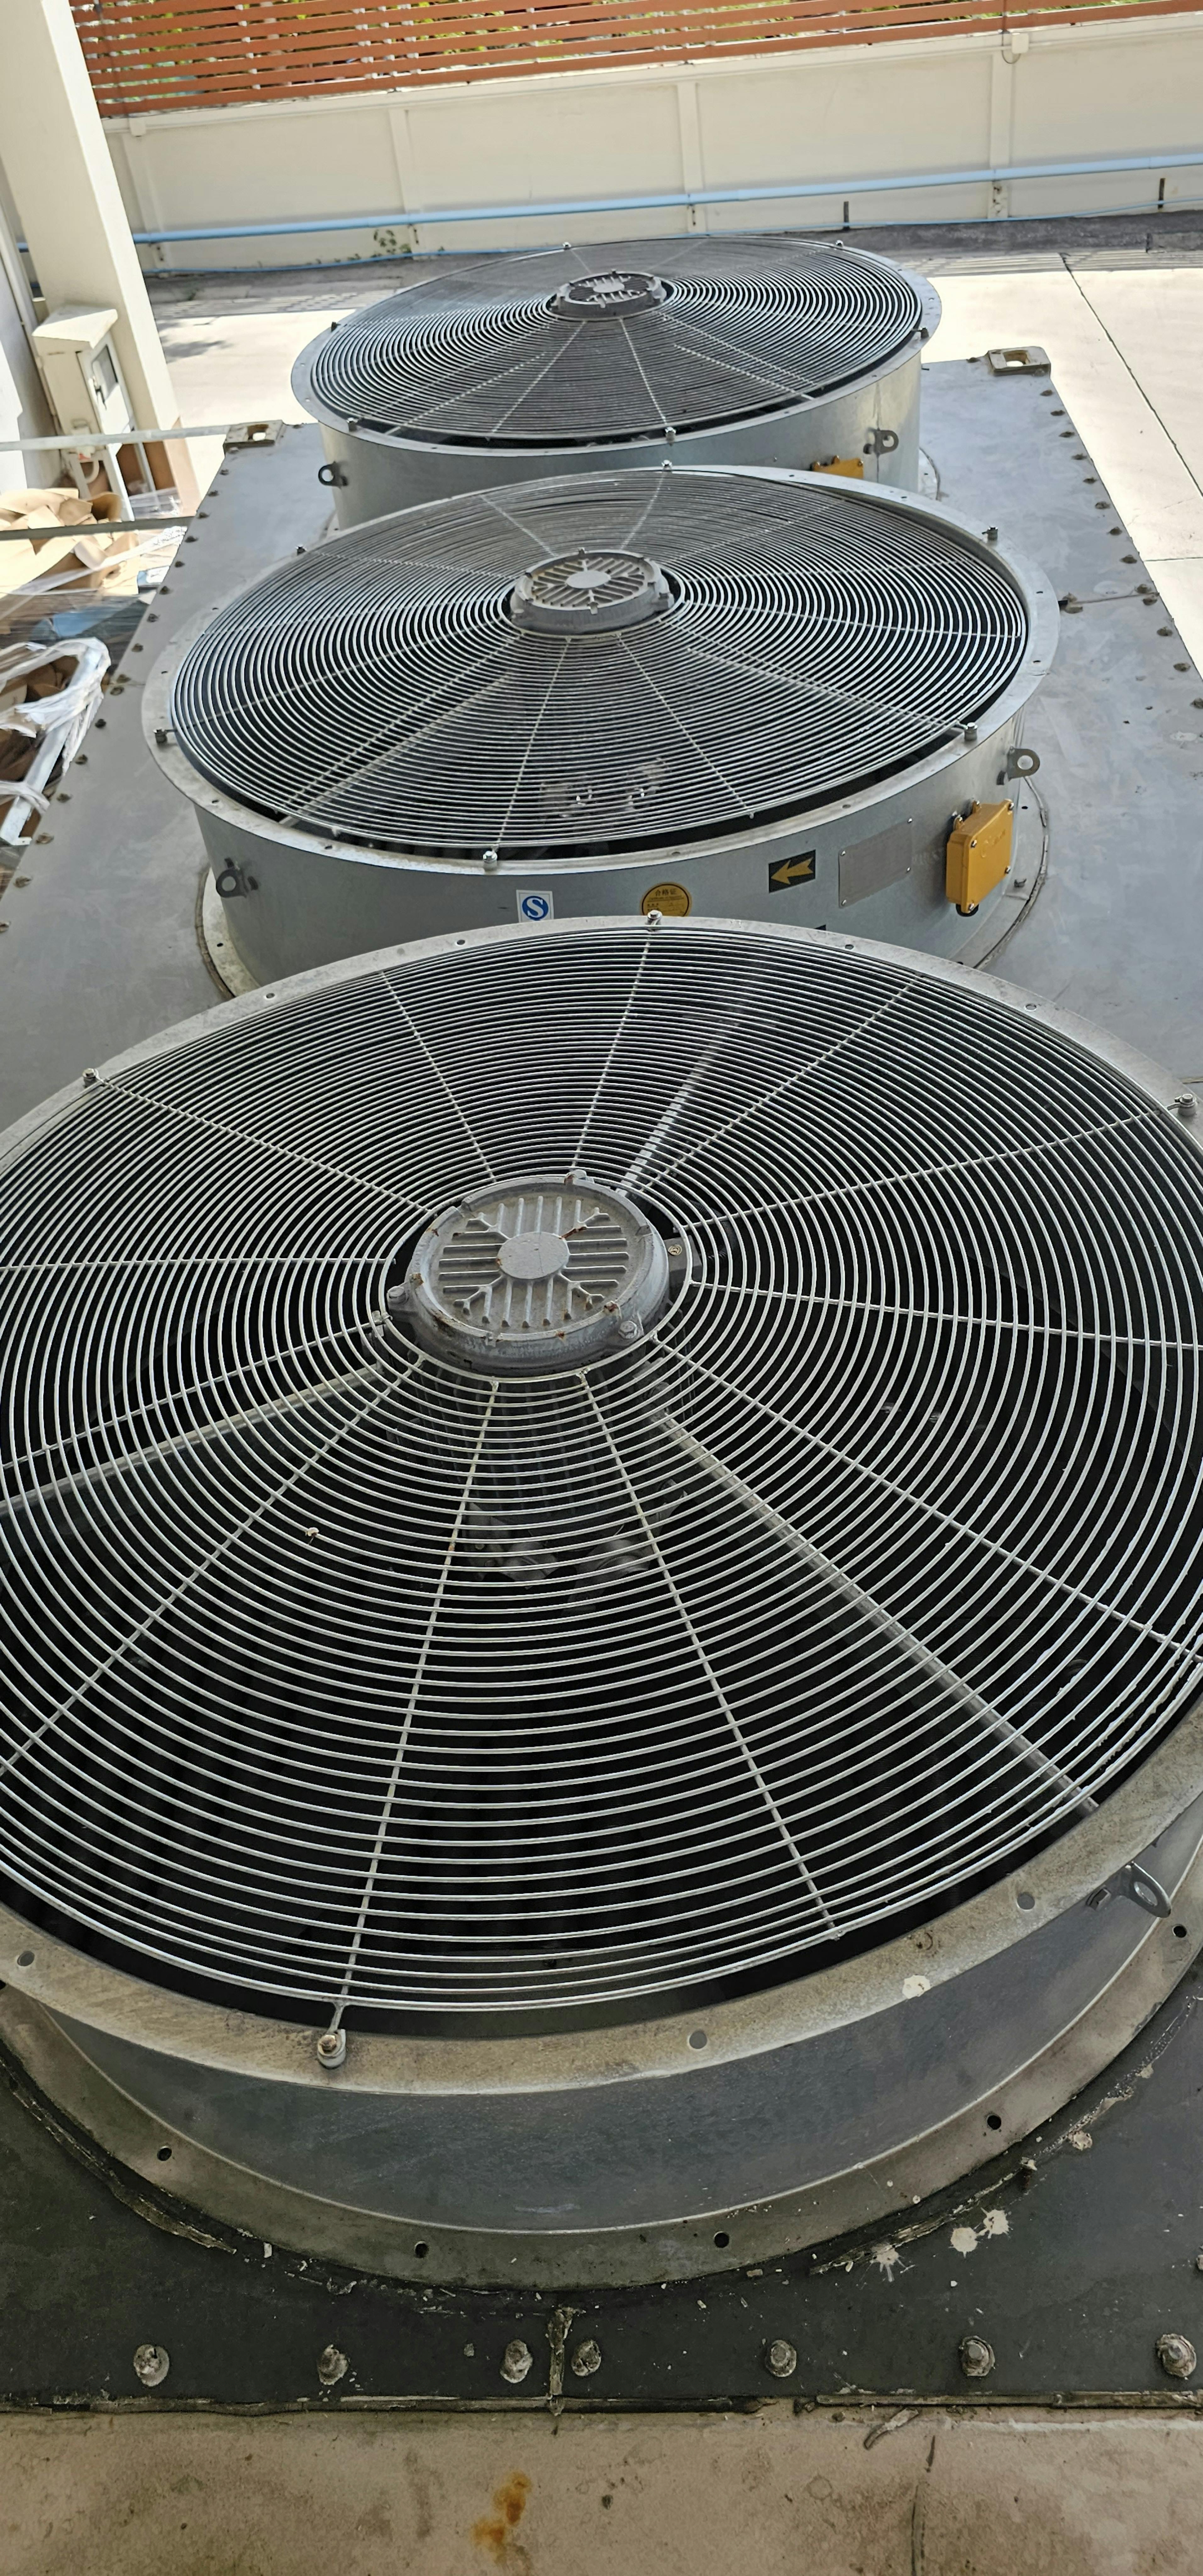 fans on cooling unit